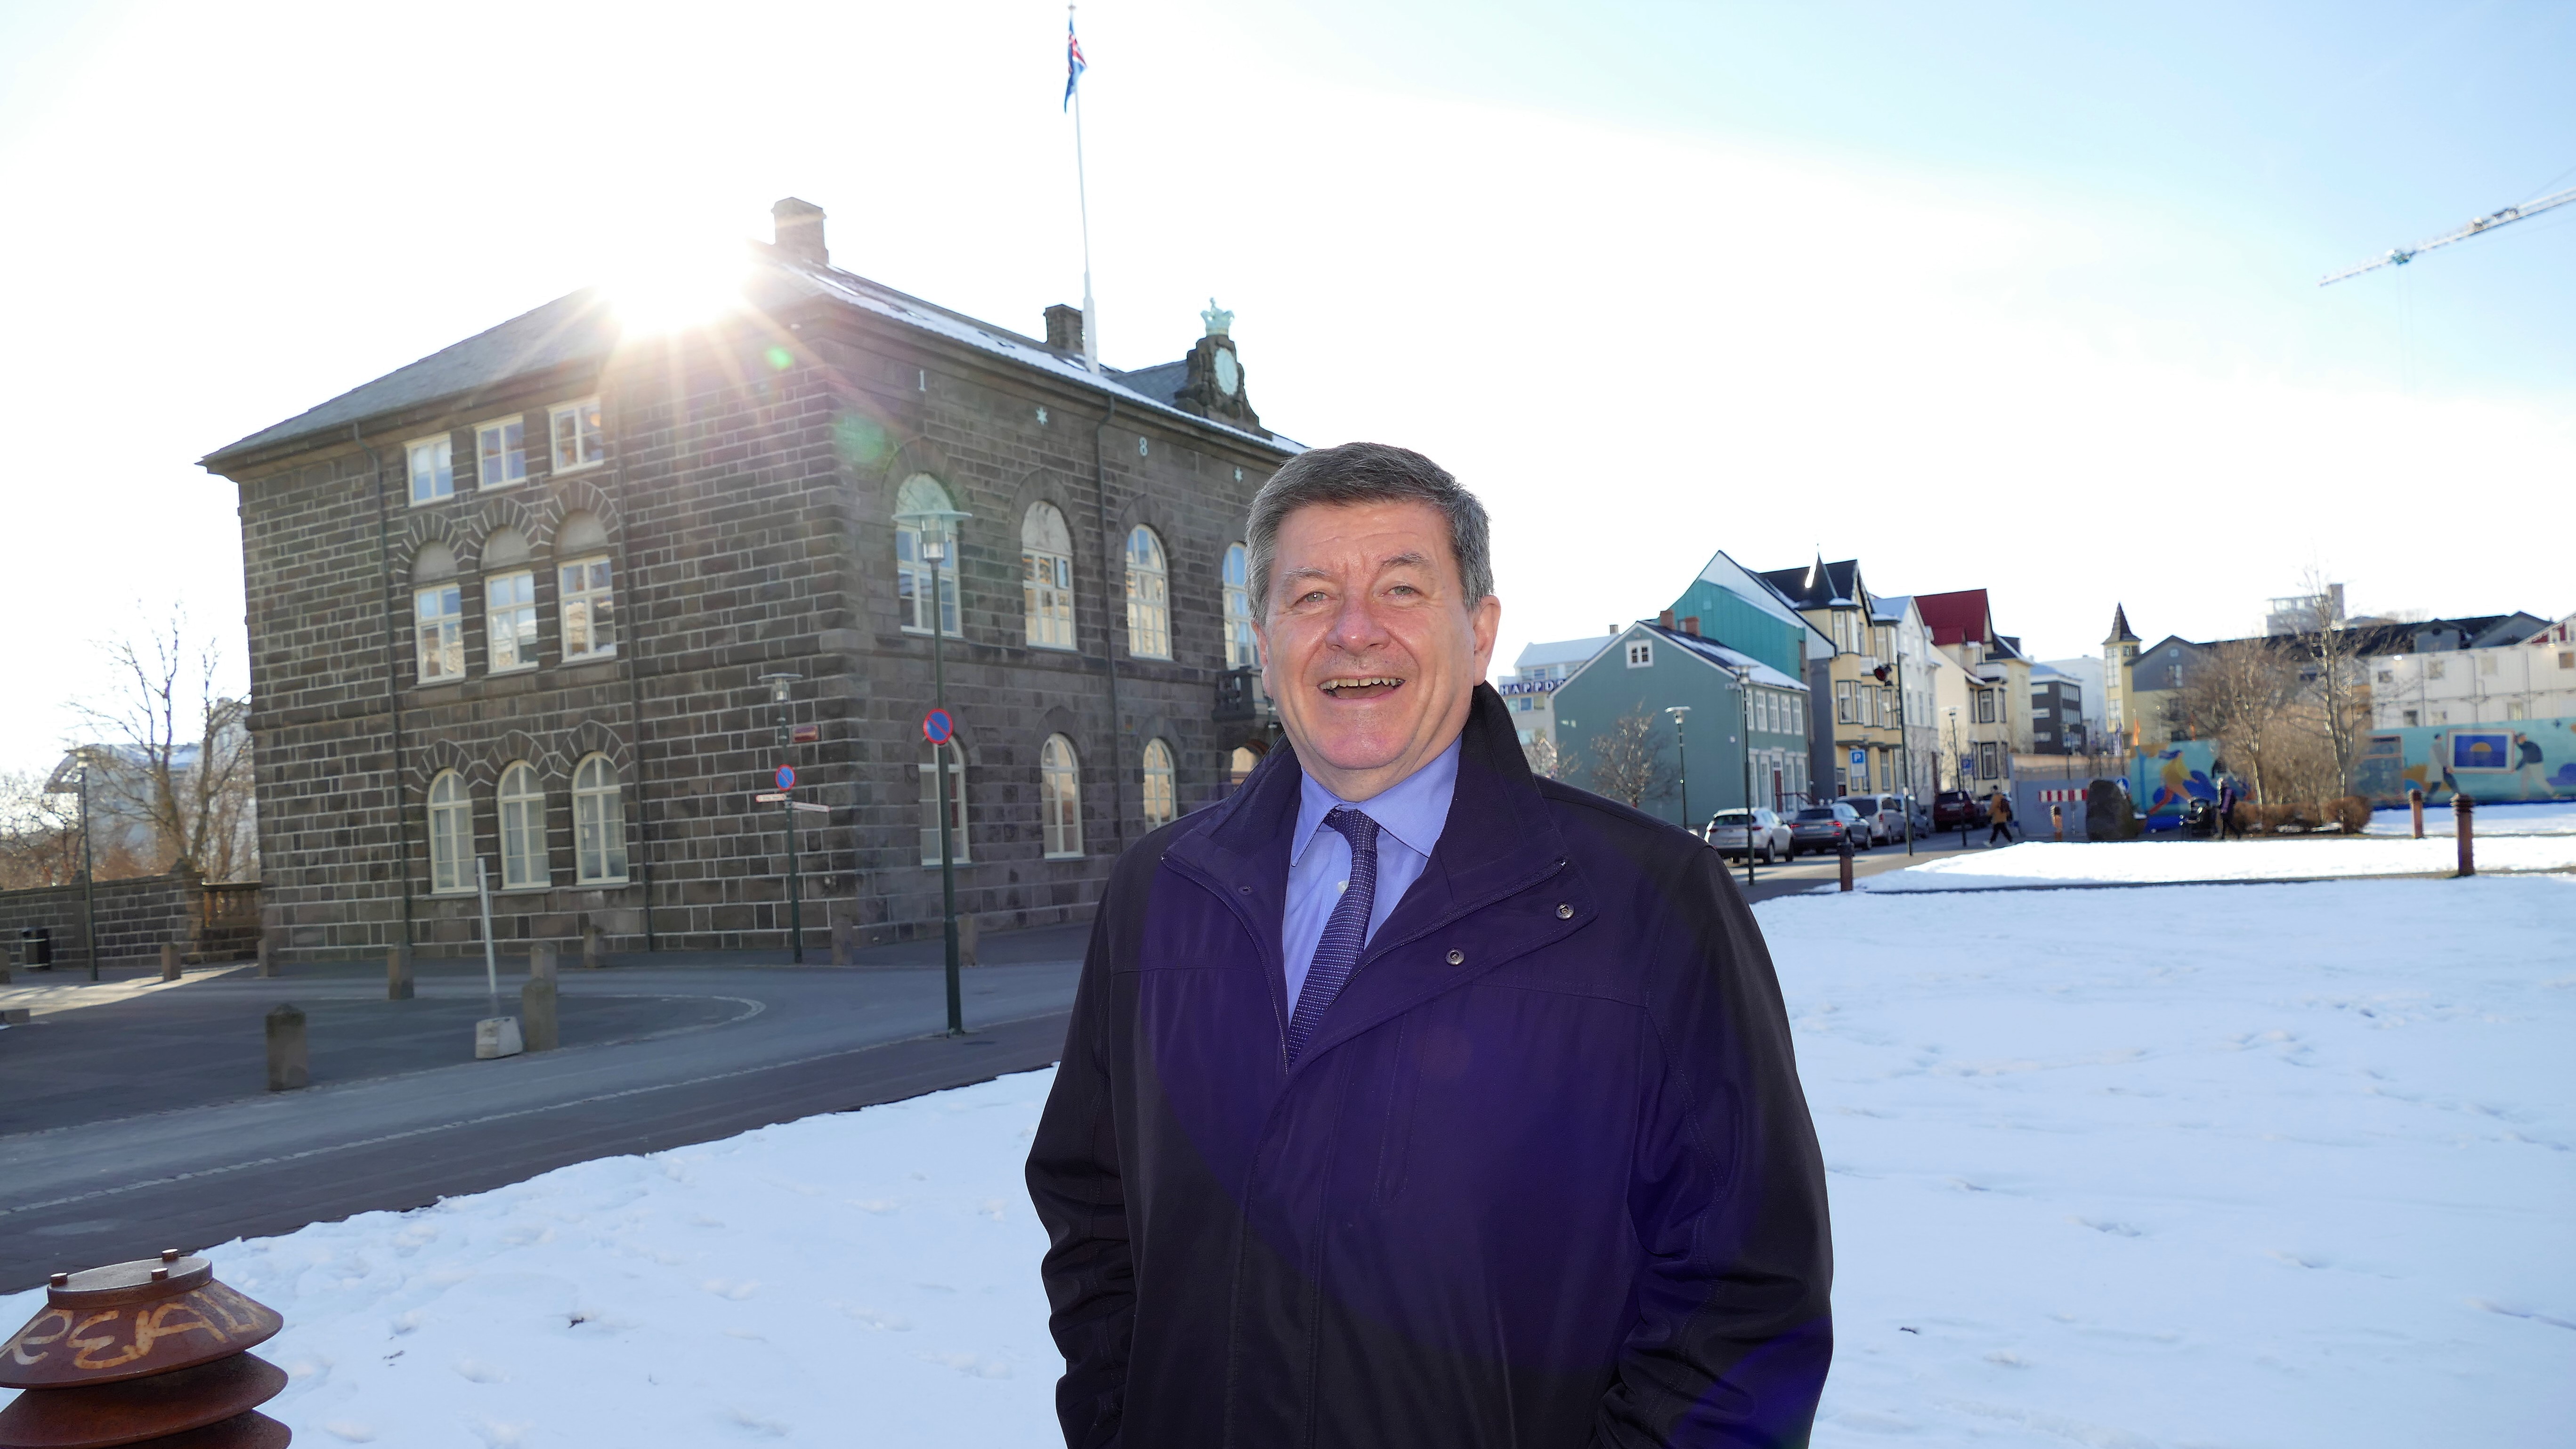 ILO's DG Guy Ryder finds inspiration from problem-solving Iceland